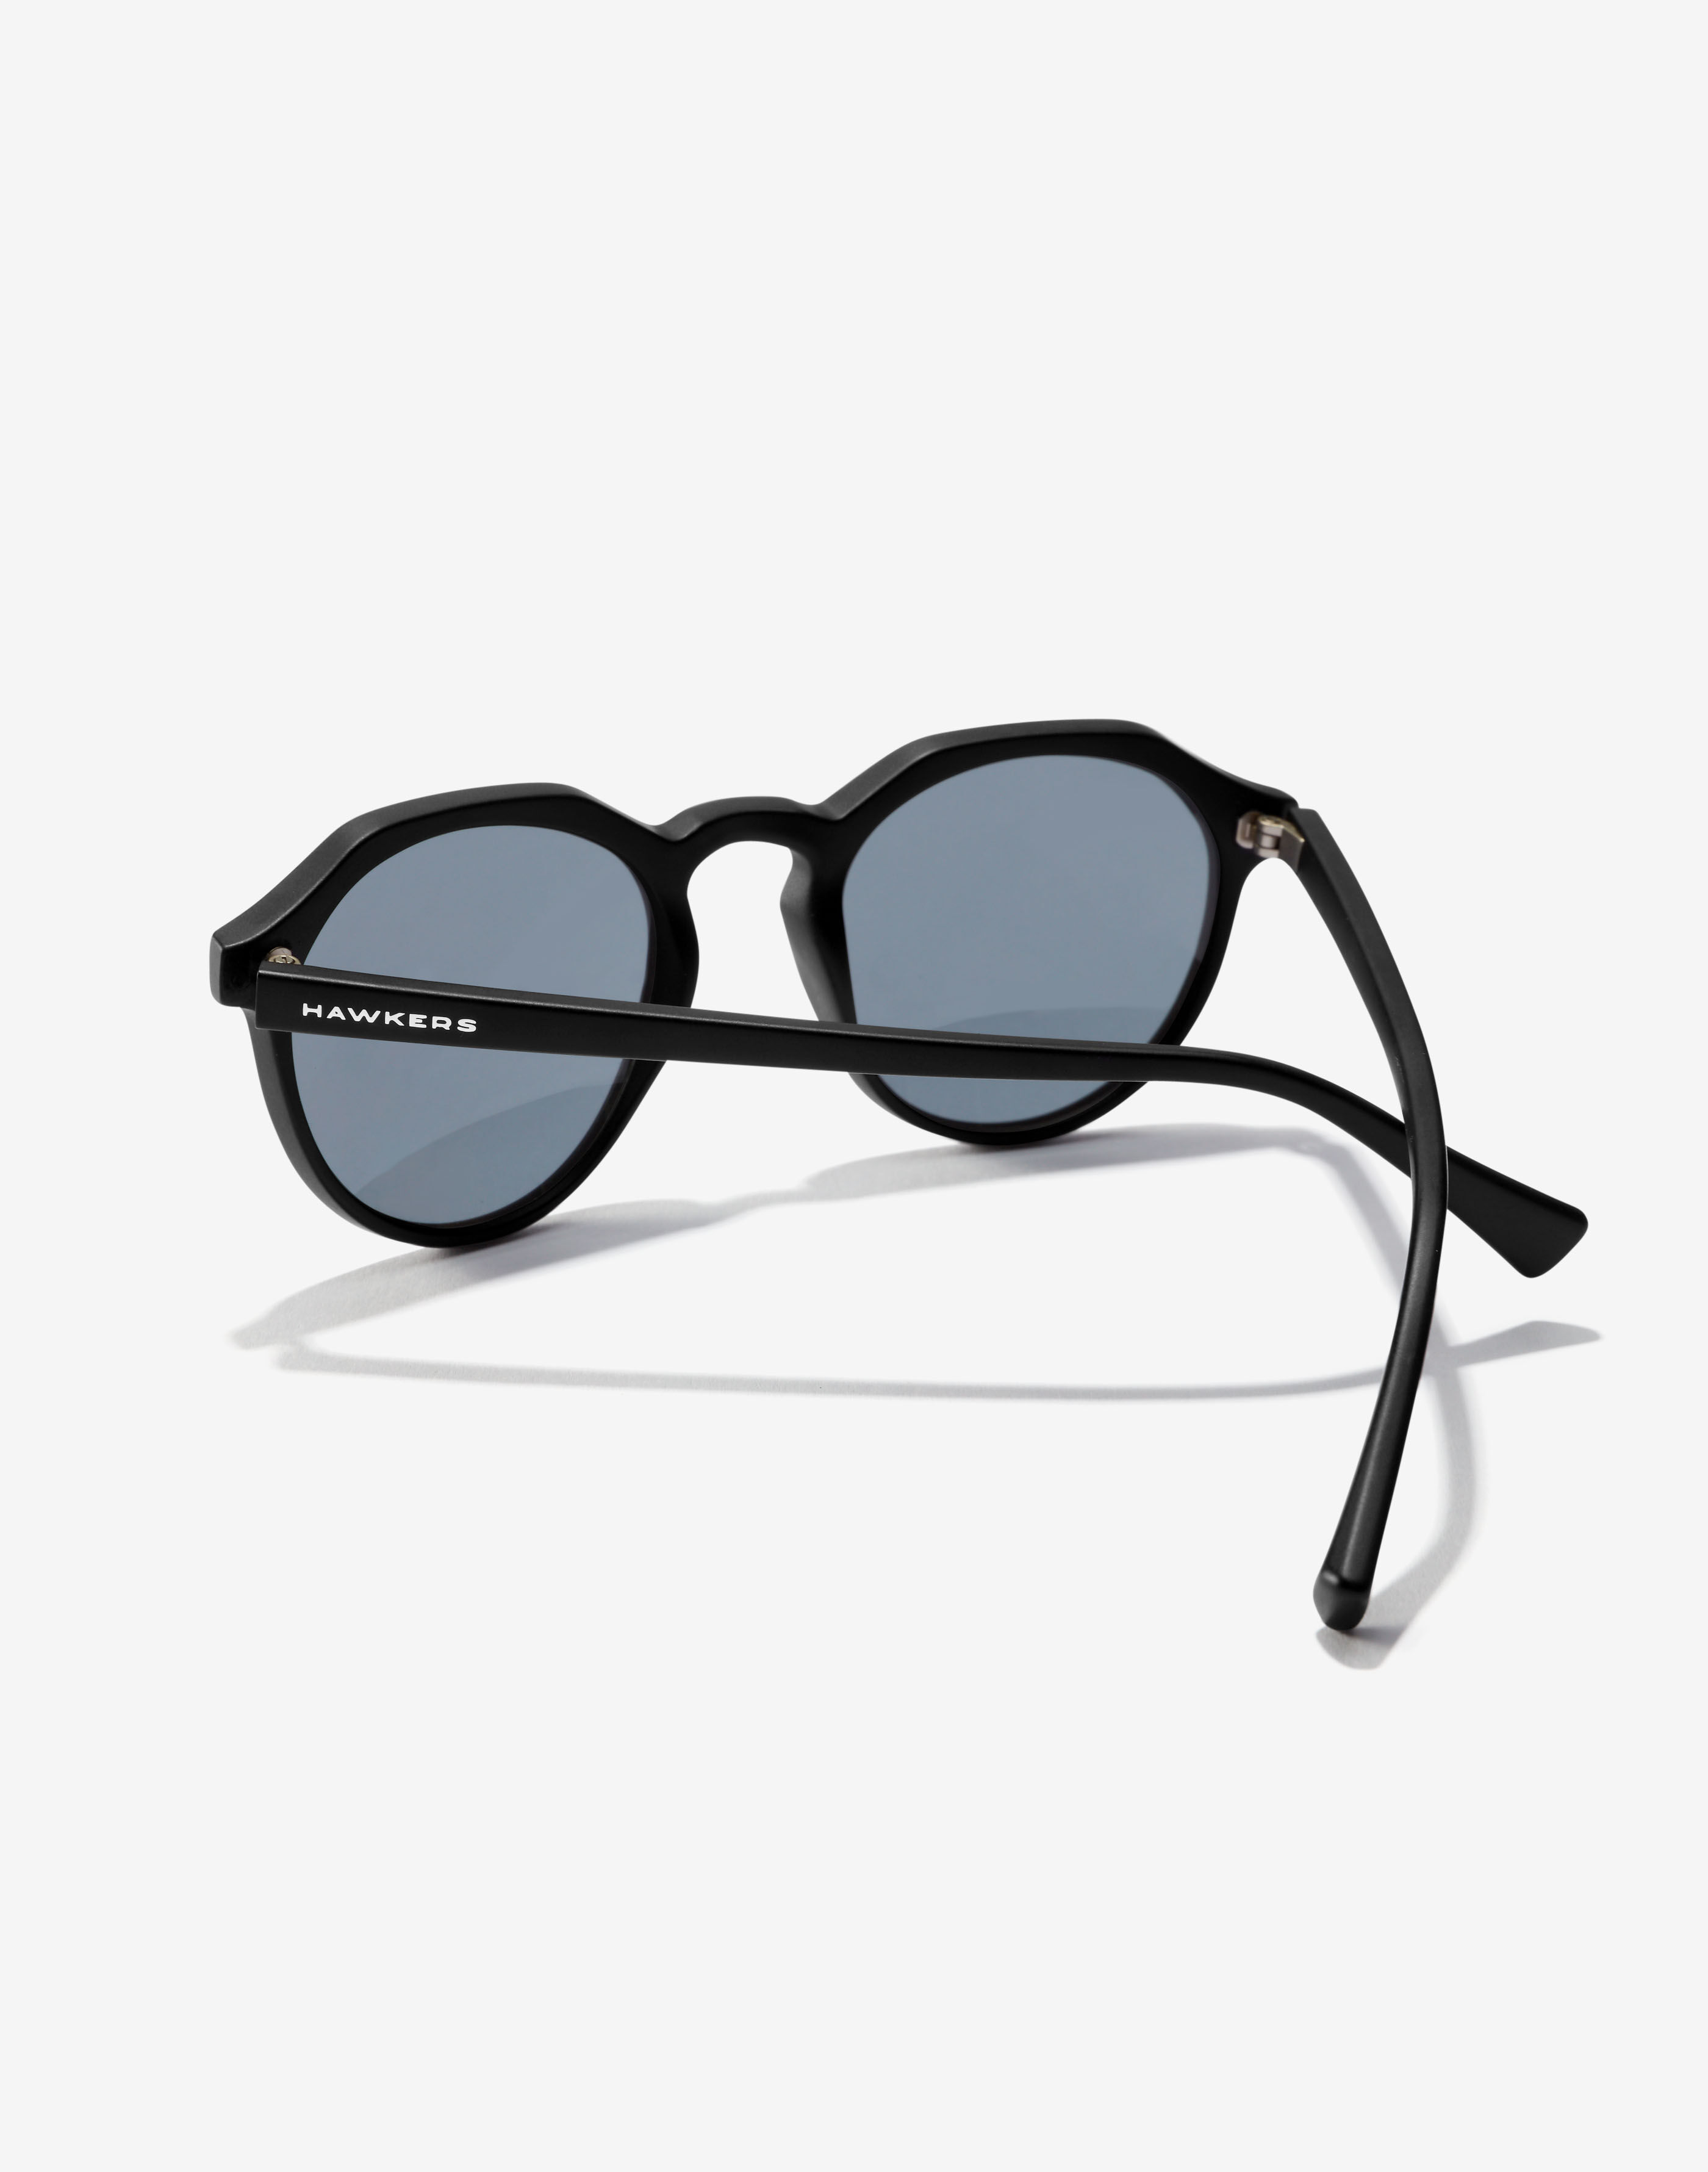 Hawkers Warwick Xs Sunglasses 